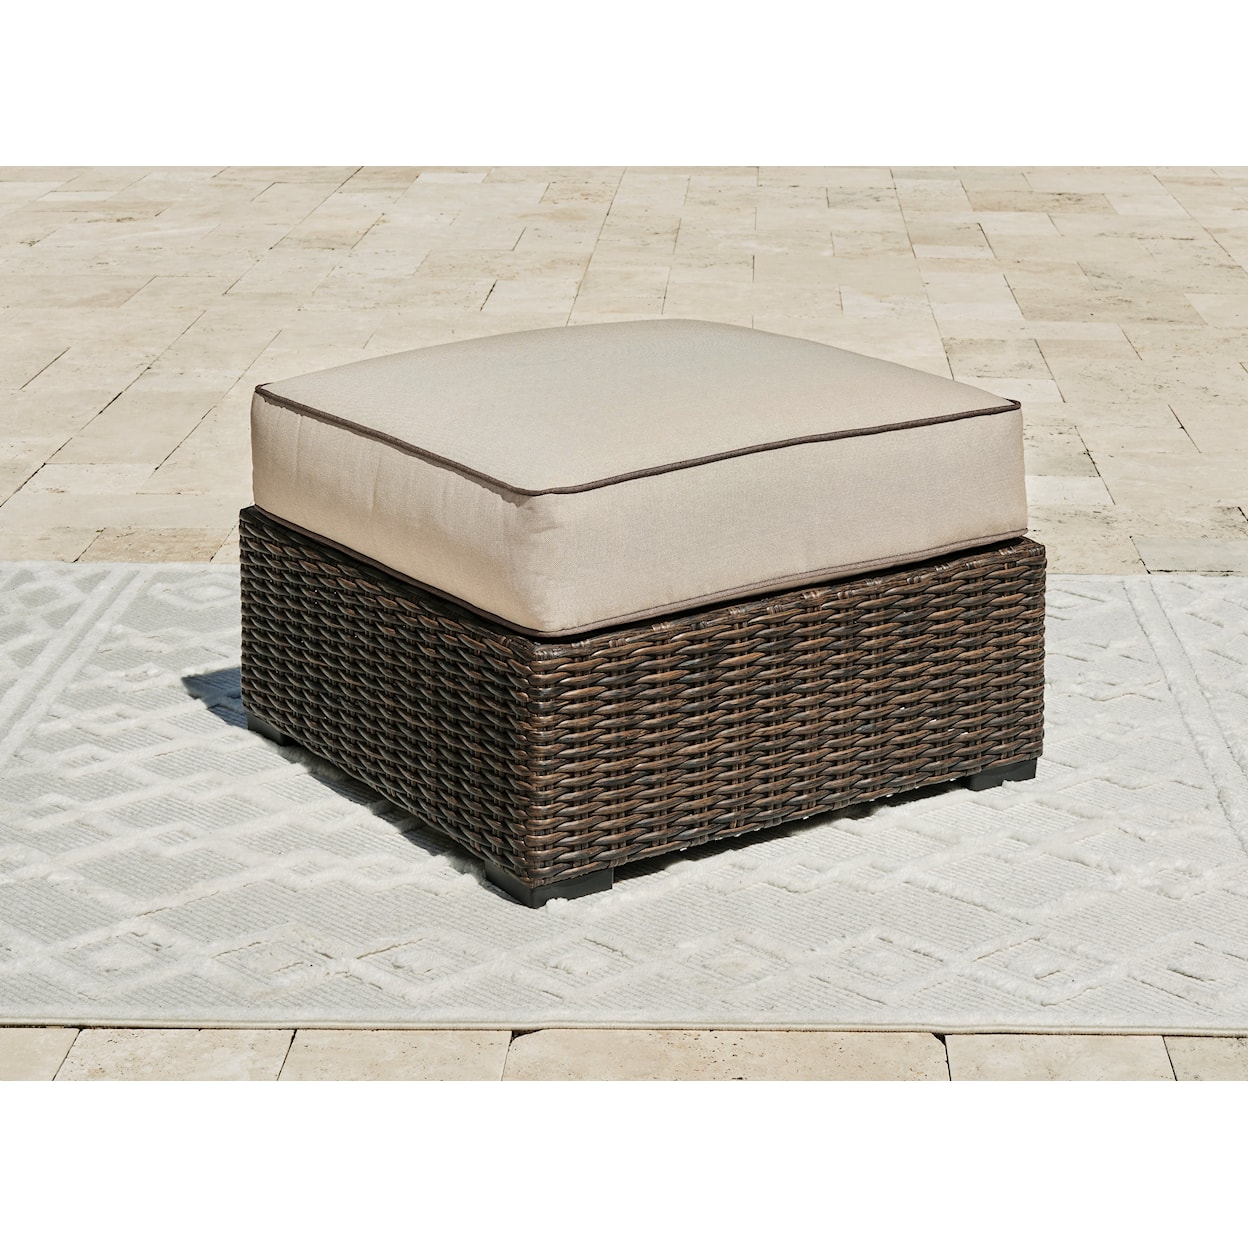 Ashley Furniture Signature Design Coastline Bay Outdoor Ottoman With Cushion